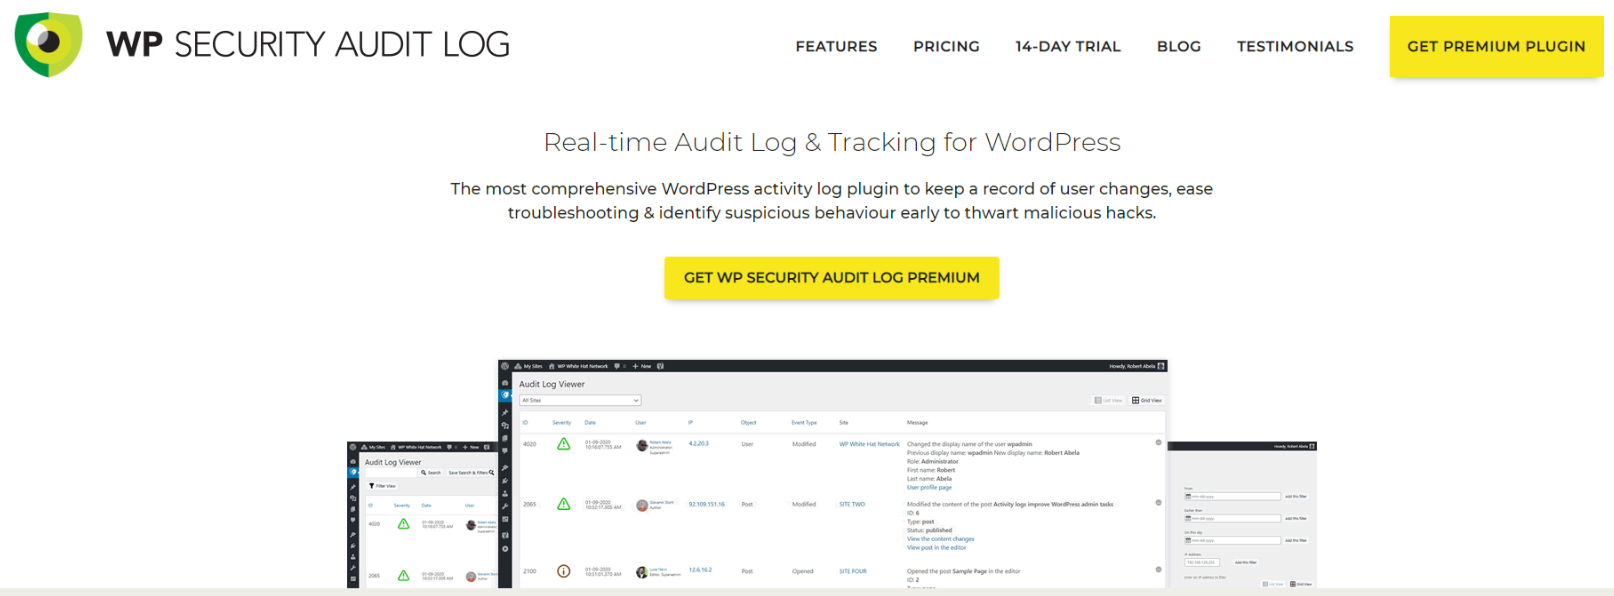 WP Security Audit Log Review - WP Security Audit Log